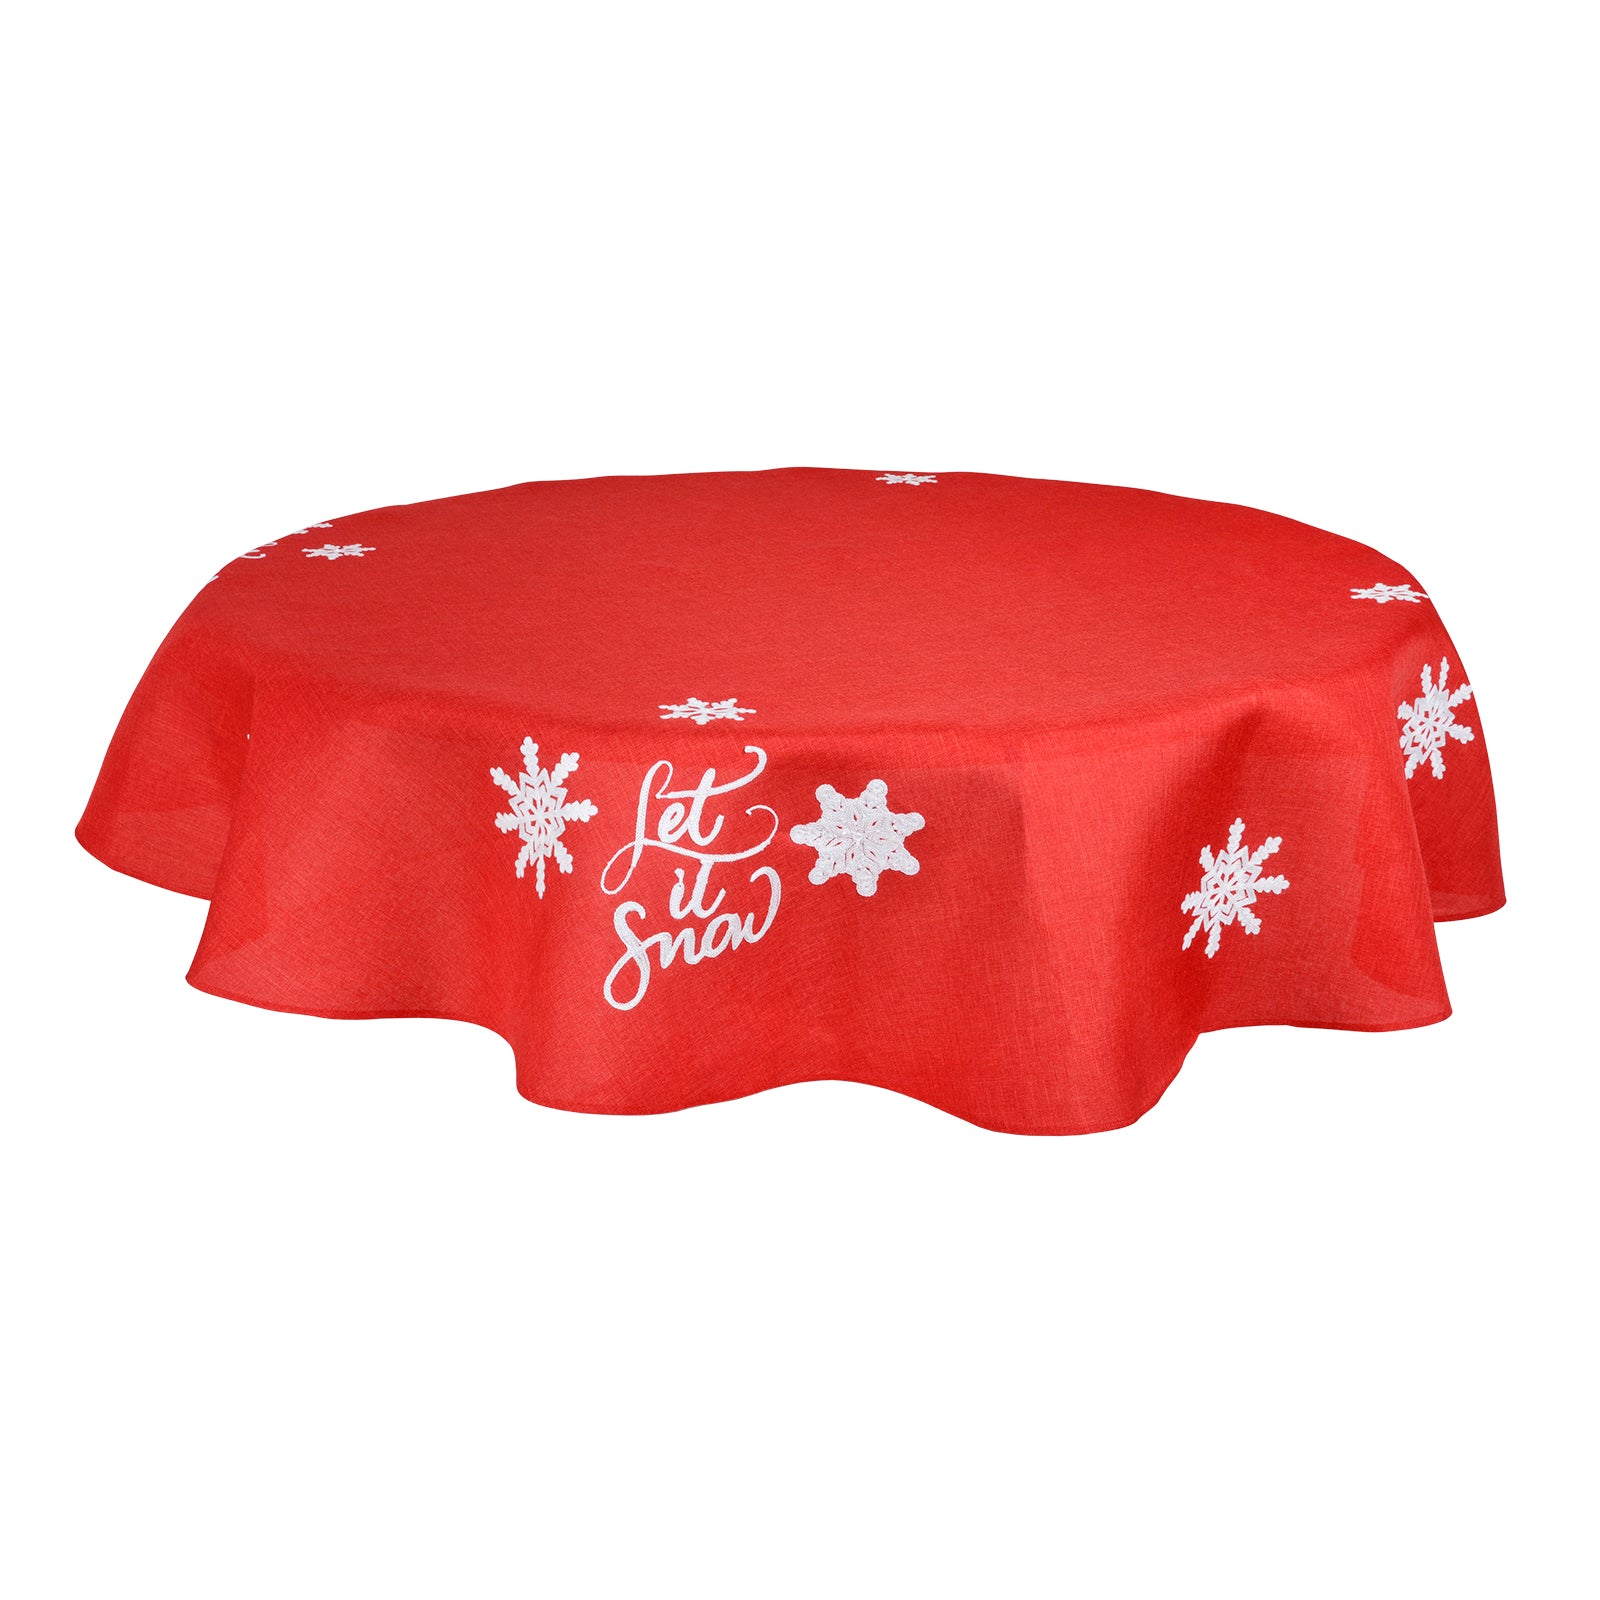 Mr Crimbo Let it Snow Embroidered Tablecloth/Napkin - MrCrimbo.co.uk -XS5865 - Red -christmas napkins